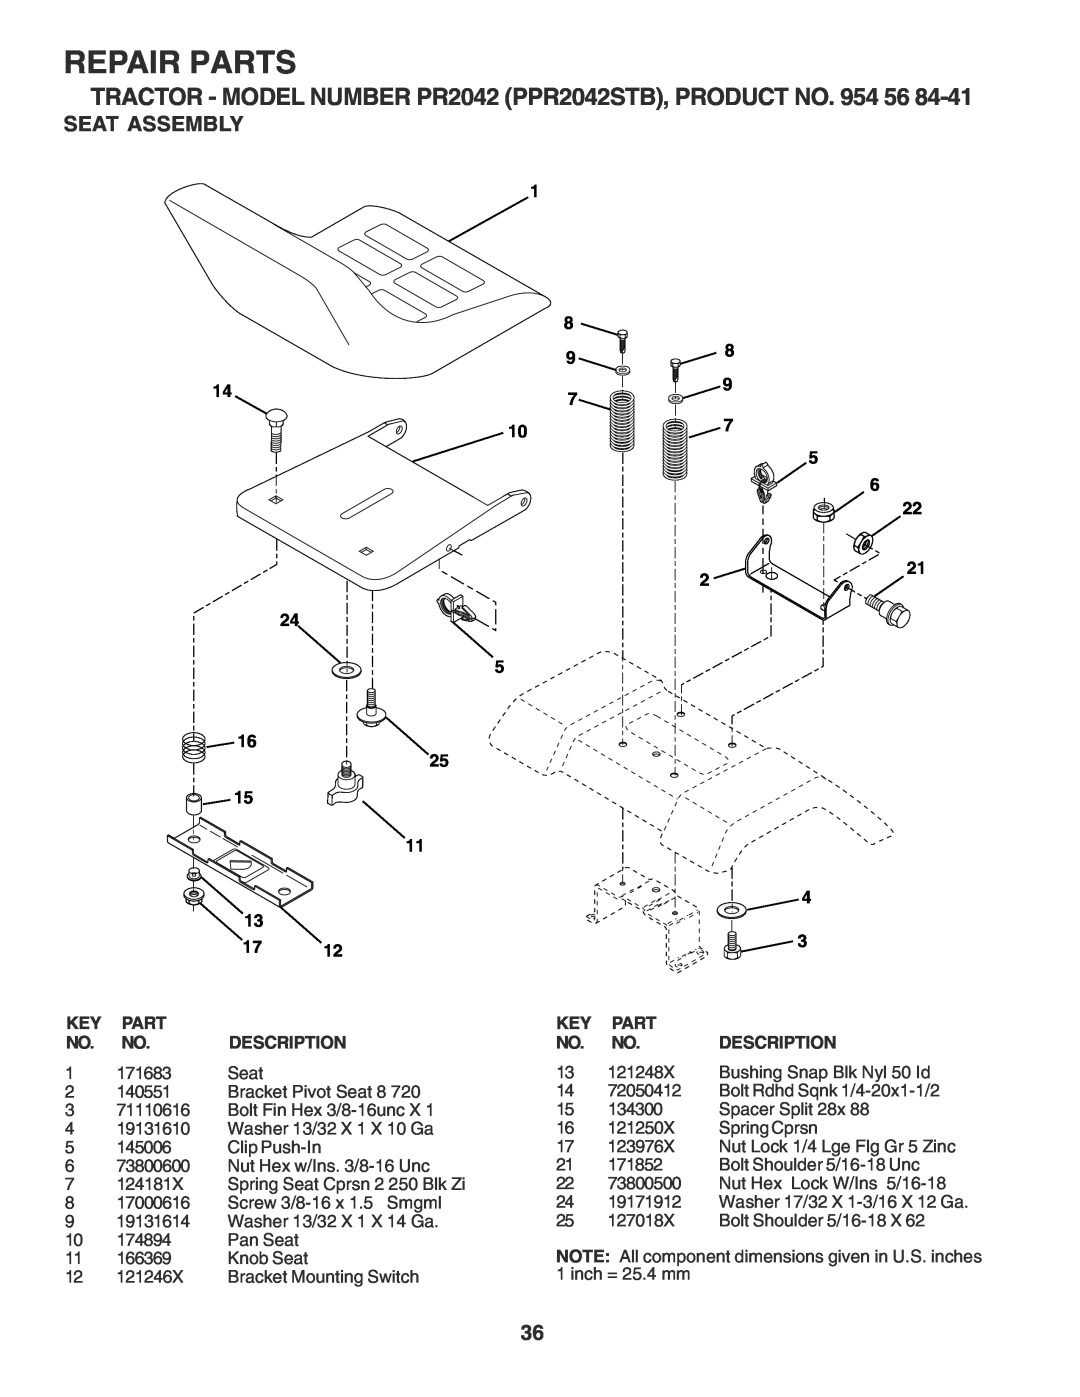 Poulan Seat Assembly, Repair Parts, TRACTOR - MODEL NUMBER PR2042 PPR2042STB, PRODUCT NO, Key Part No. No. Description 